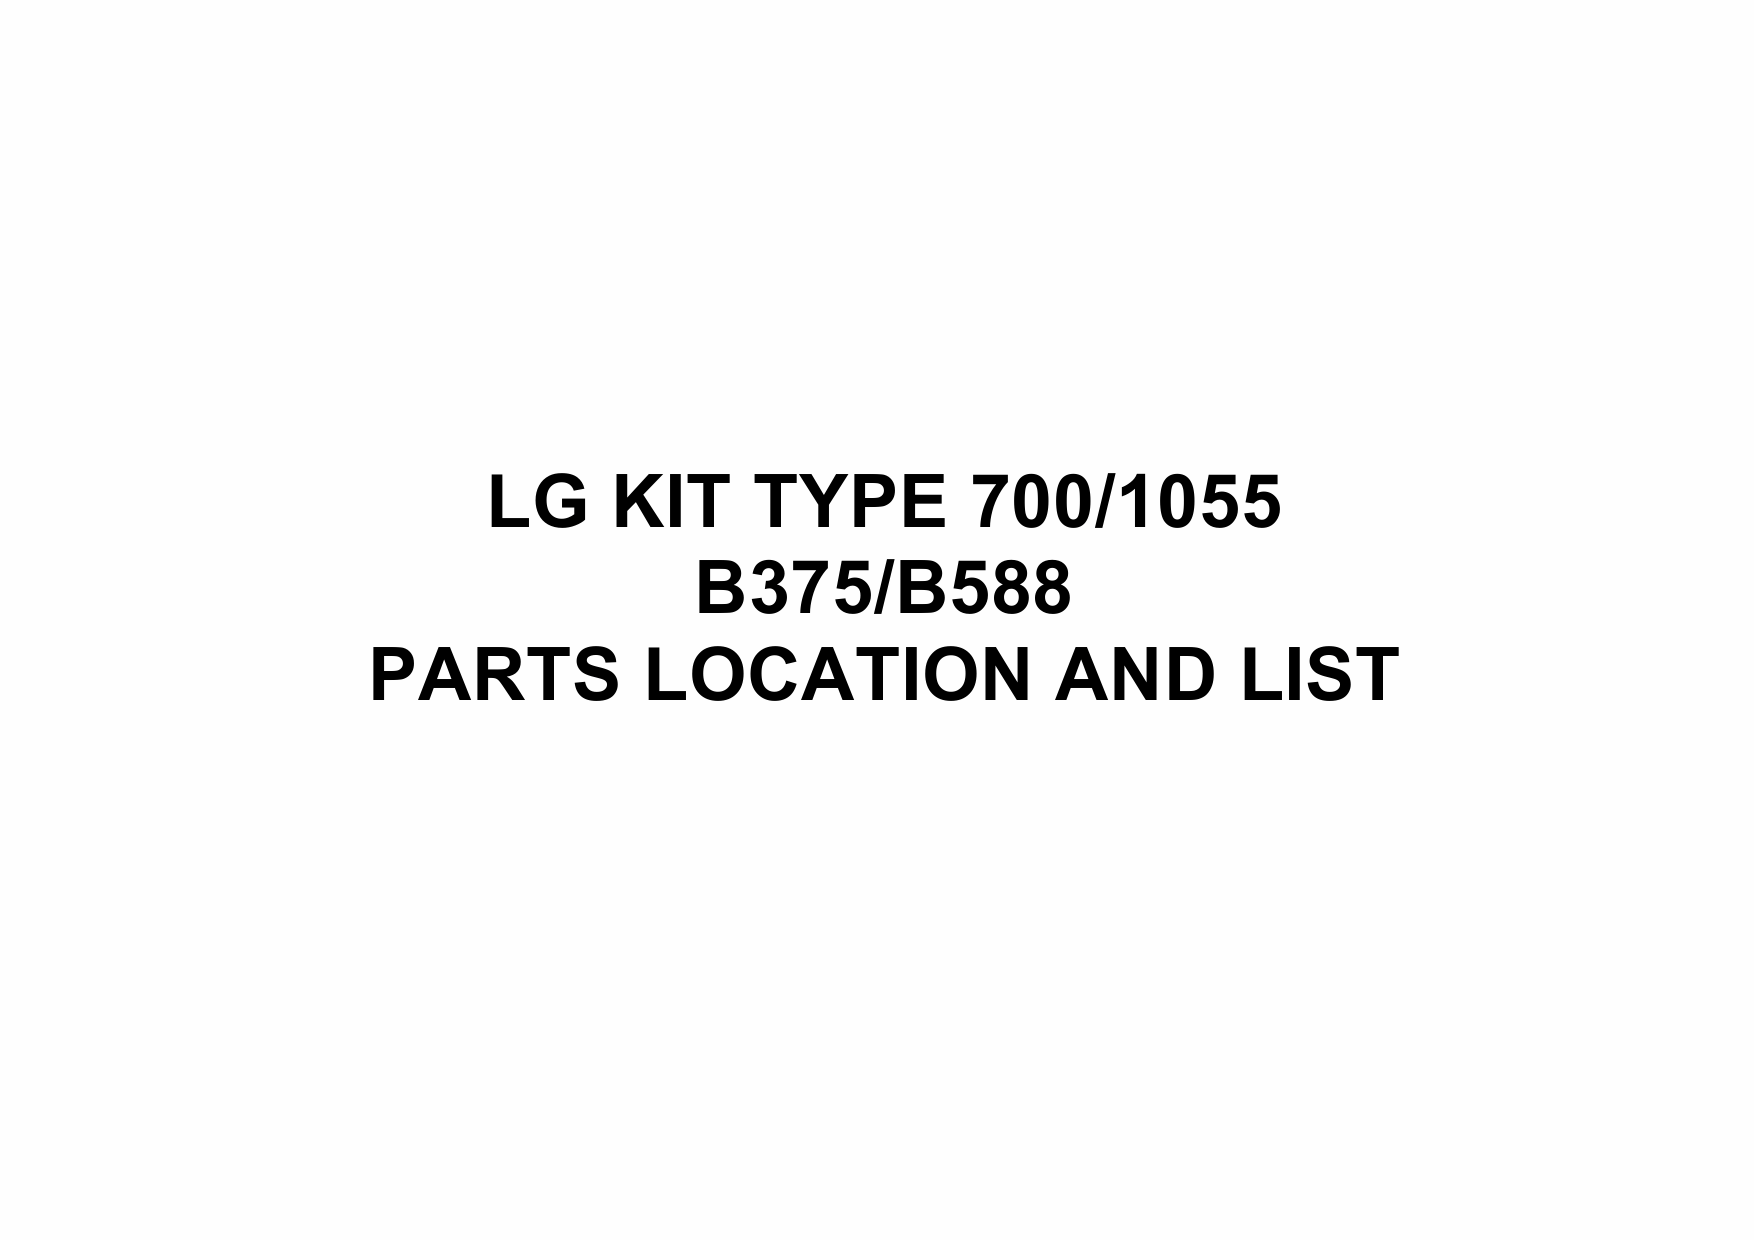 RICOH Options B375 B588 LG-KIT-TYPE-700-1055 Parts Catalog PDF download-1